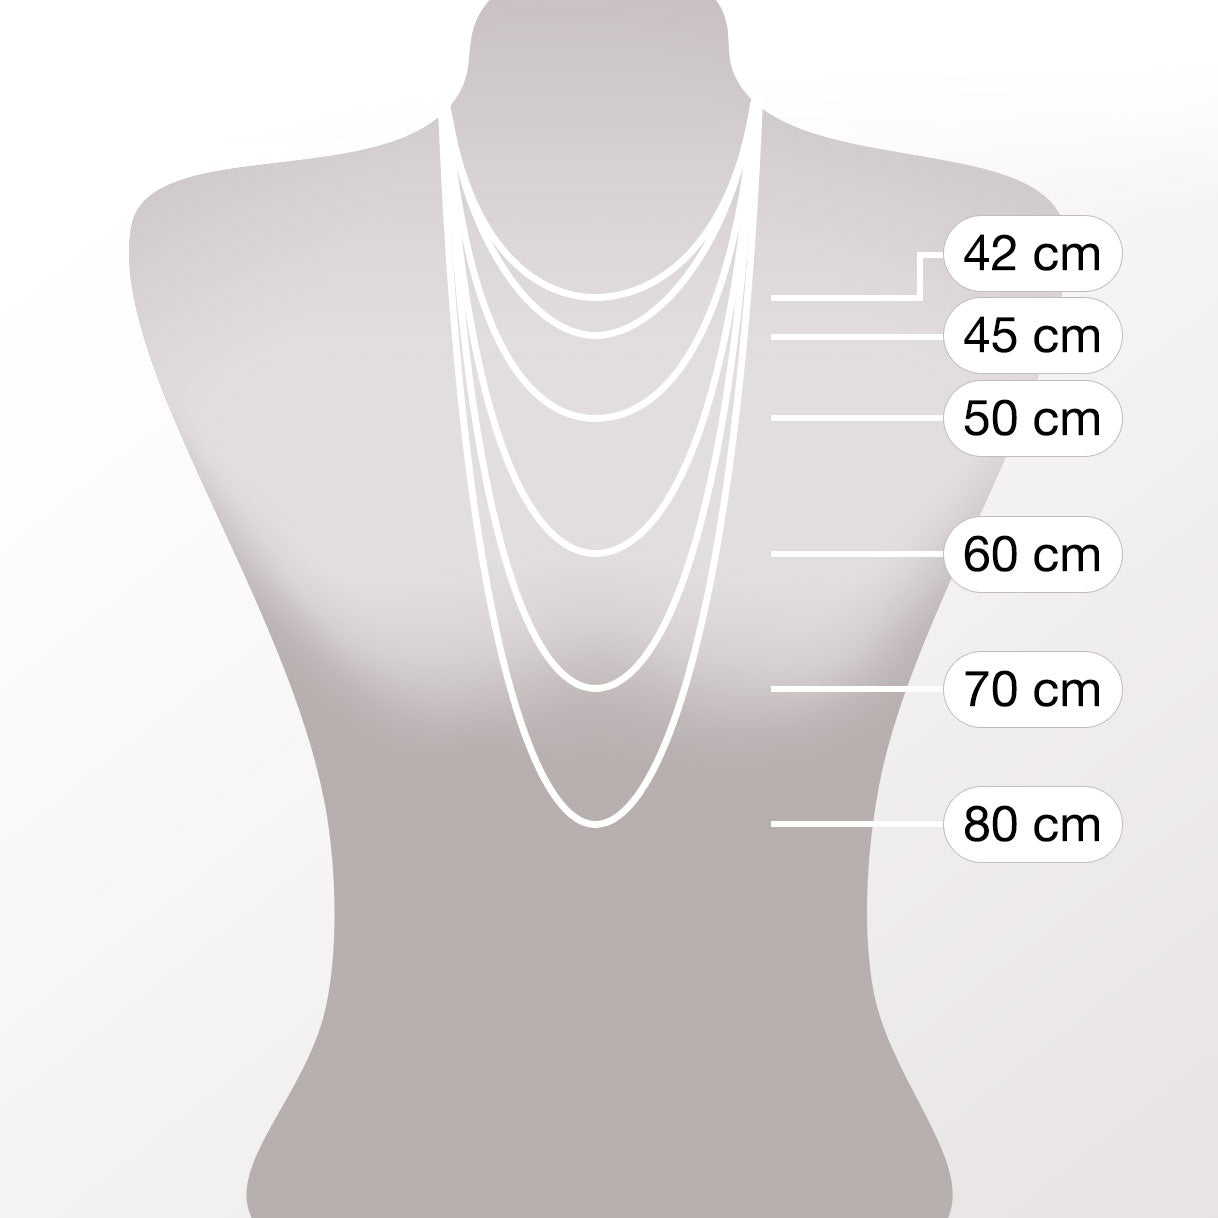 Halskette 80cm Lotta